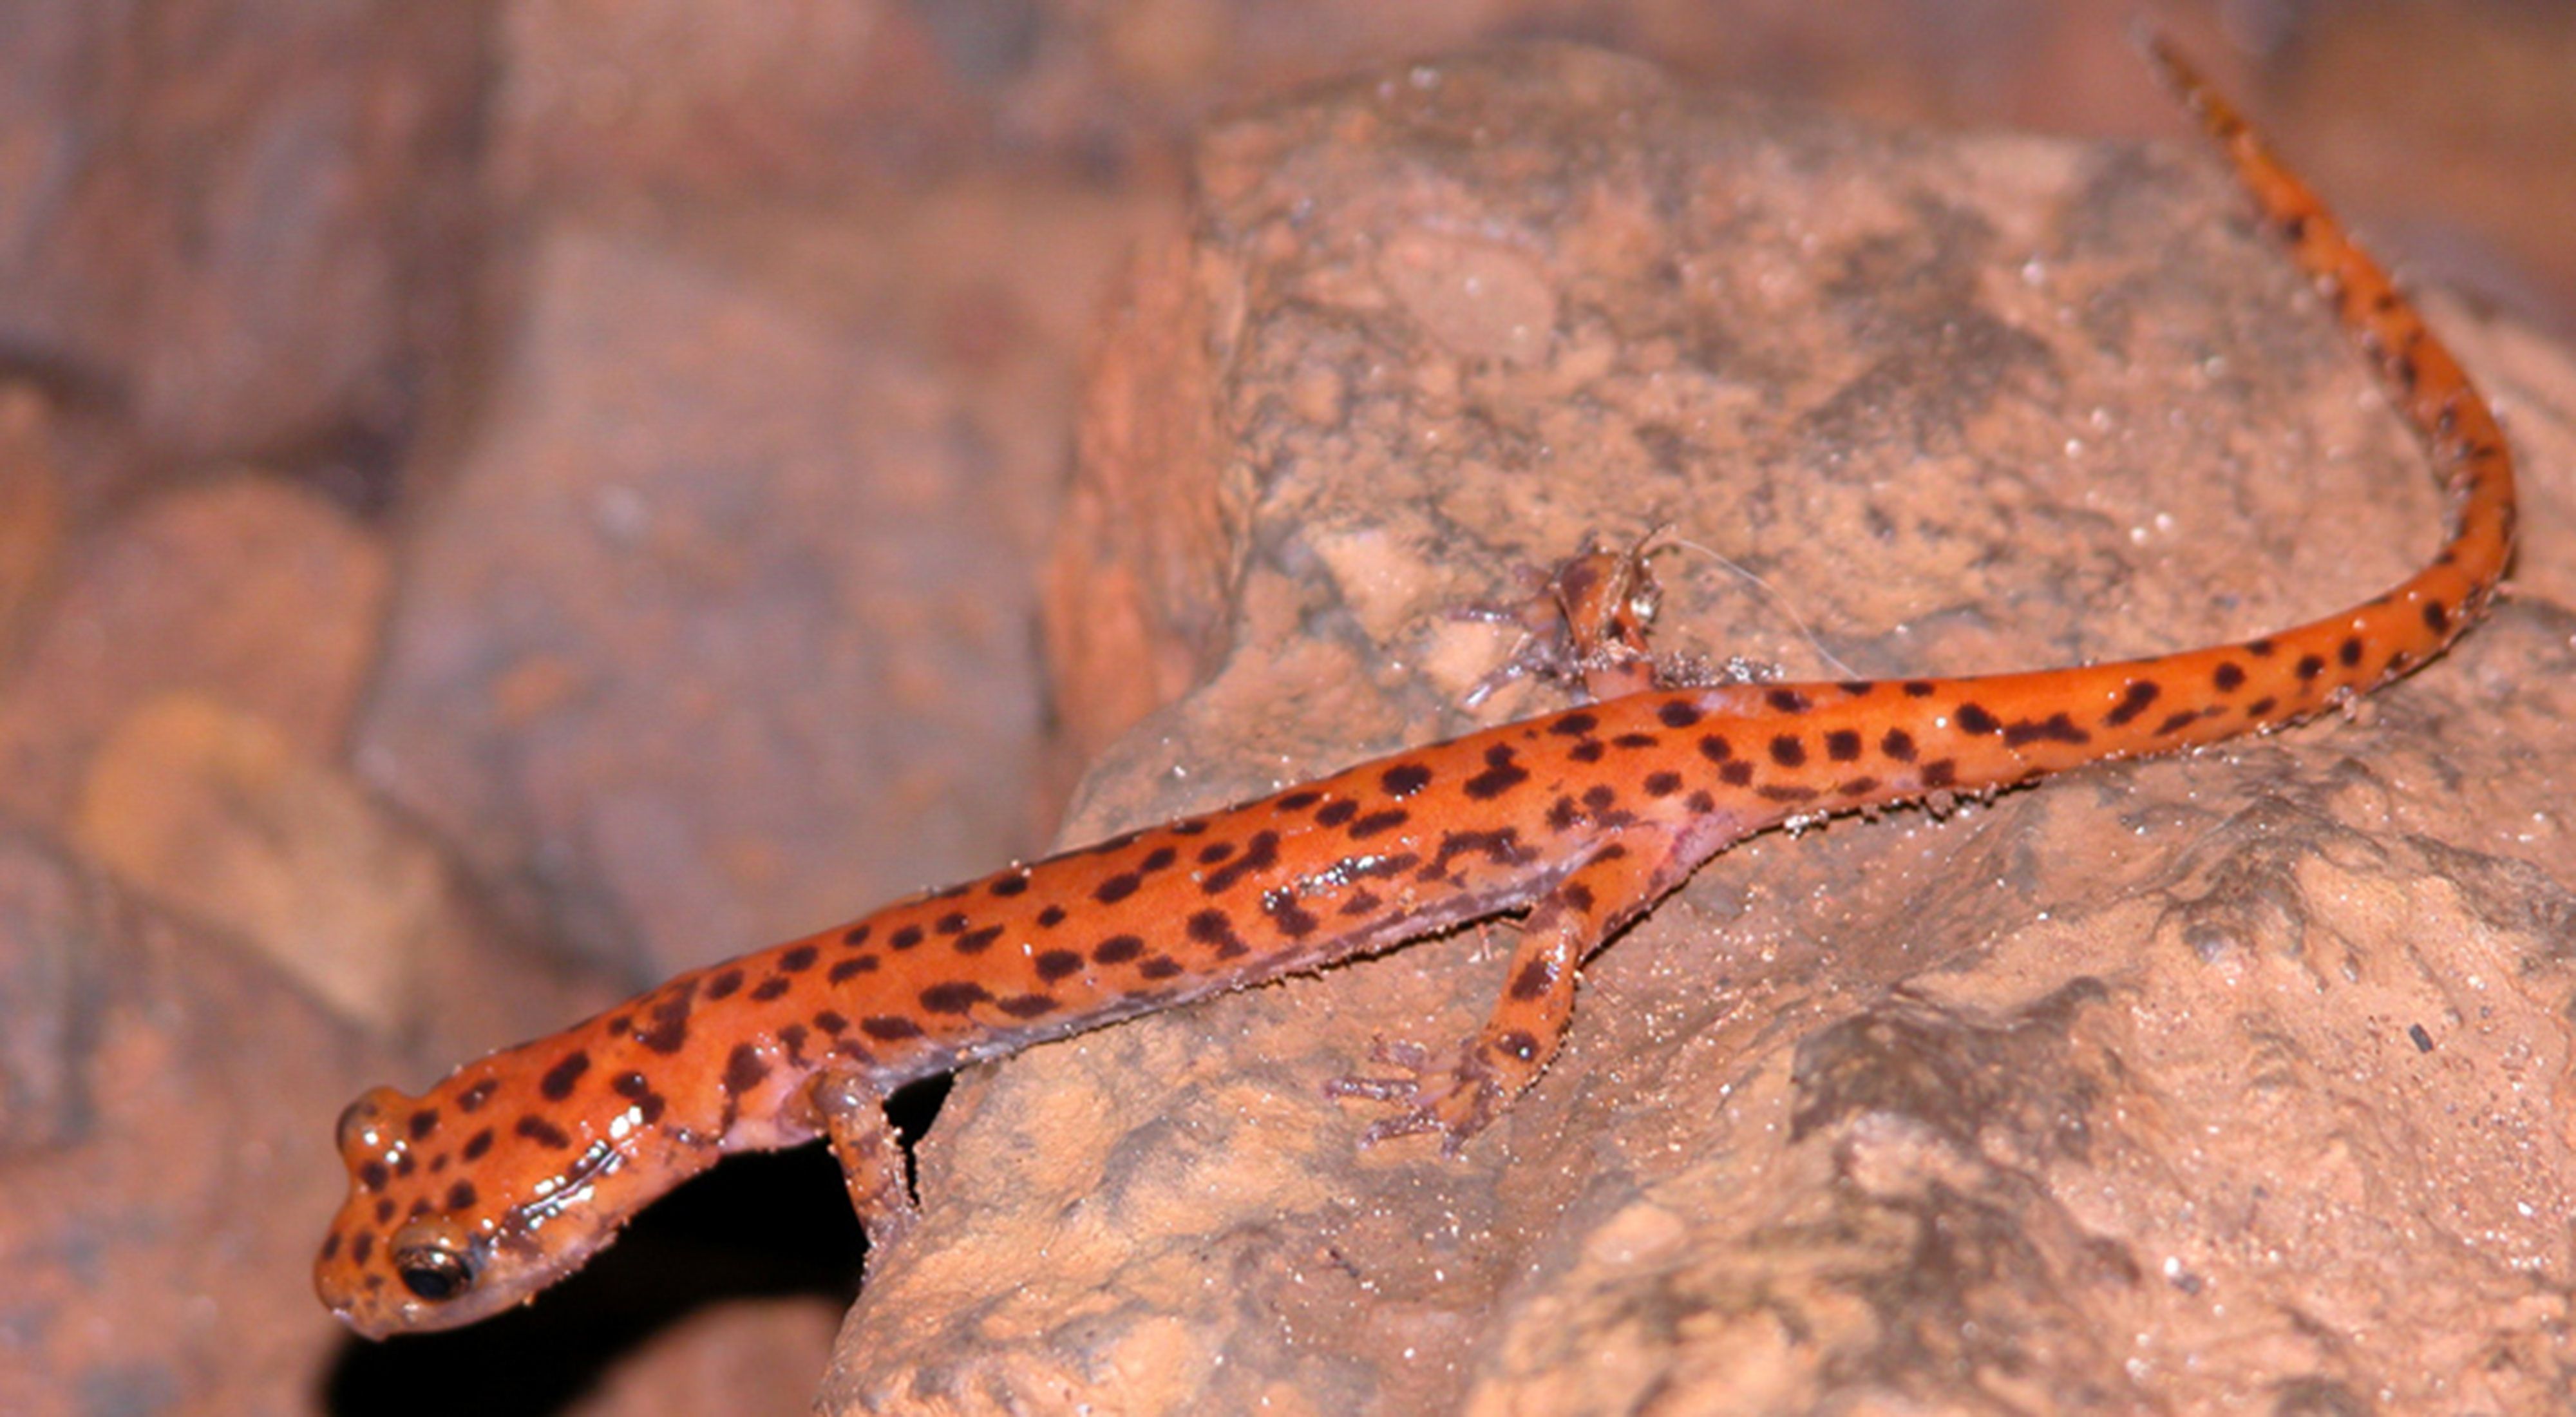 An orange salamander with brown spots on a tan rock.